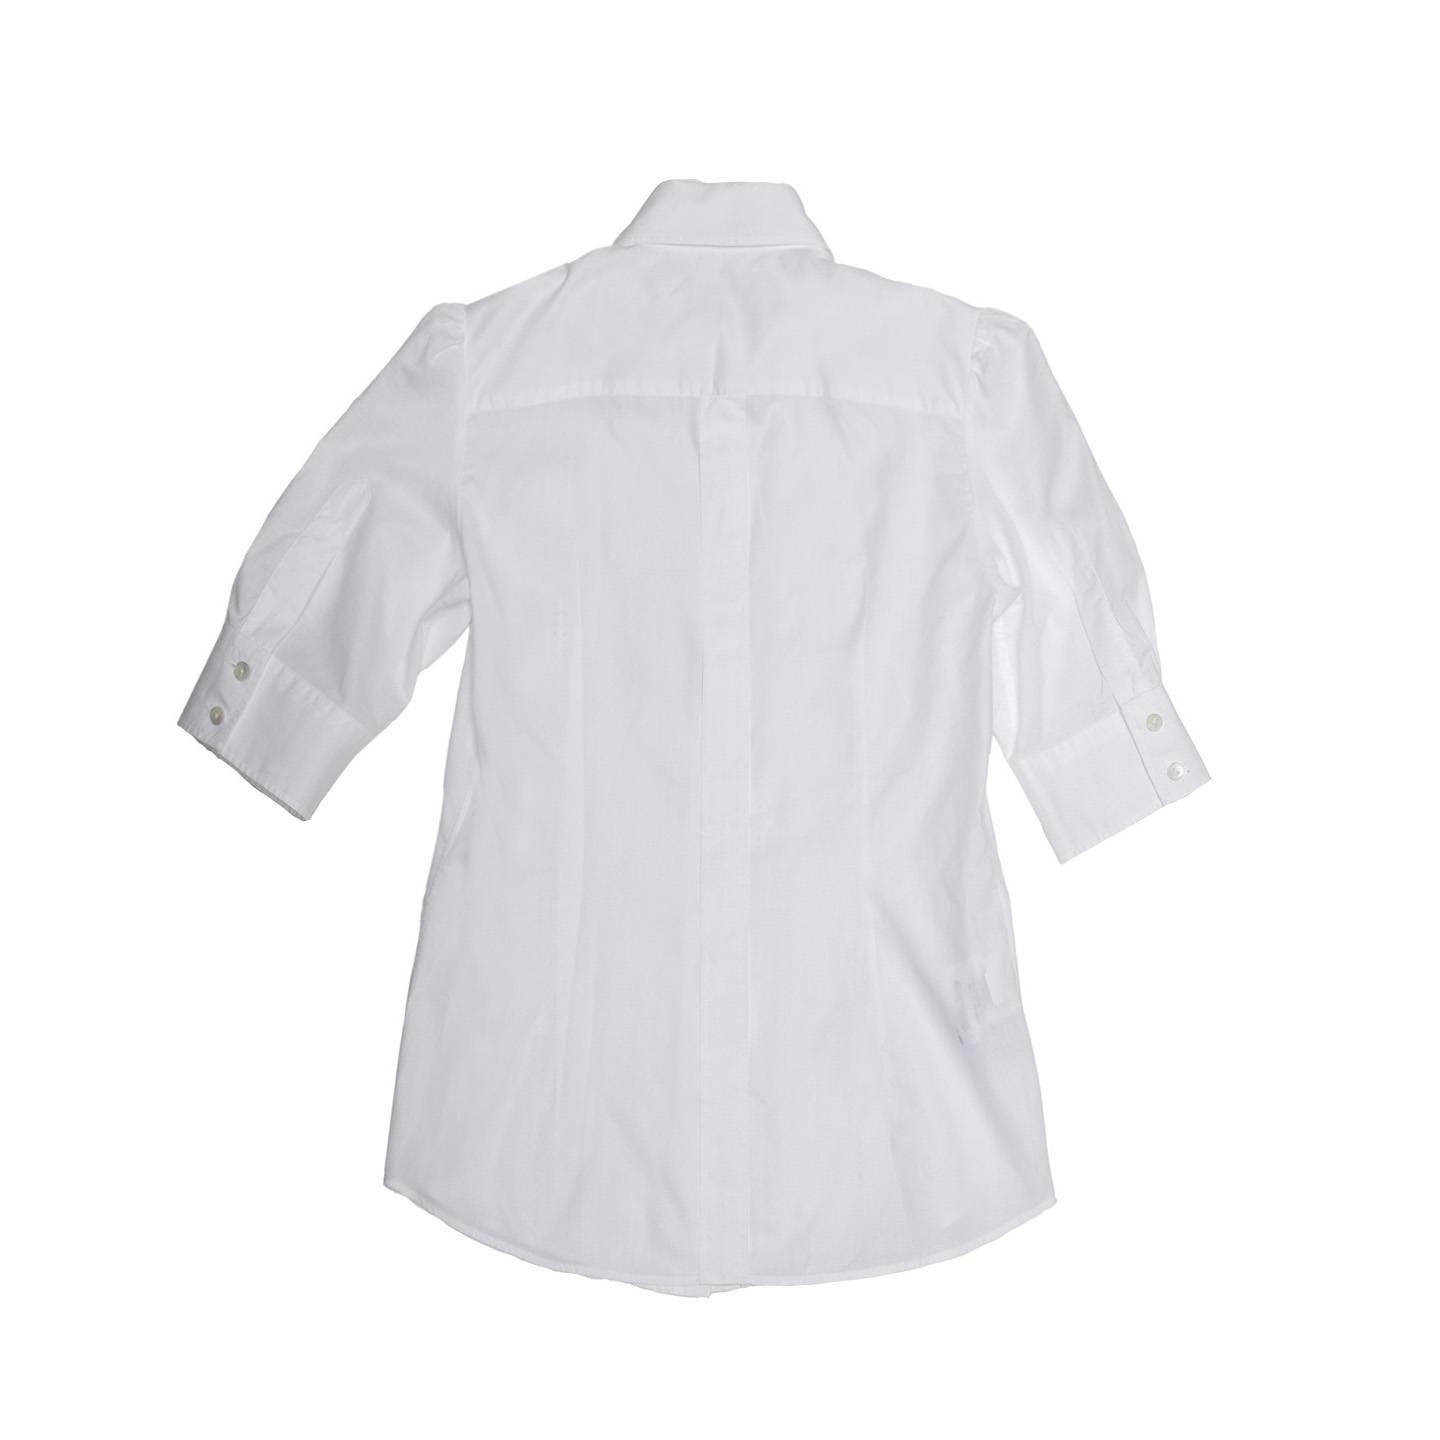 Gray Dolce & Gabbana White Cotton & Lace Shirt For Sale